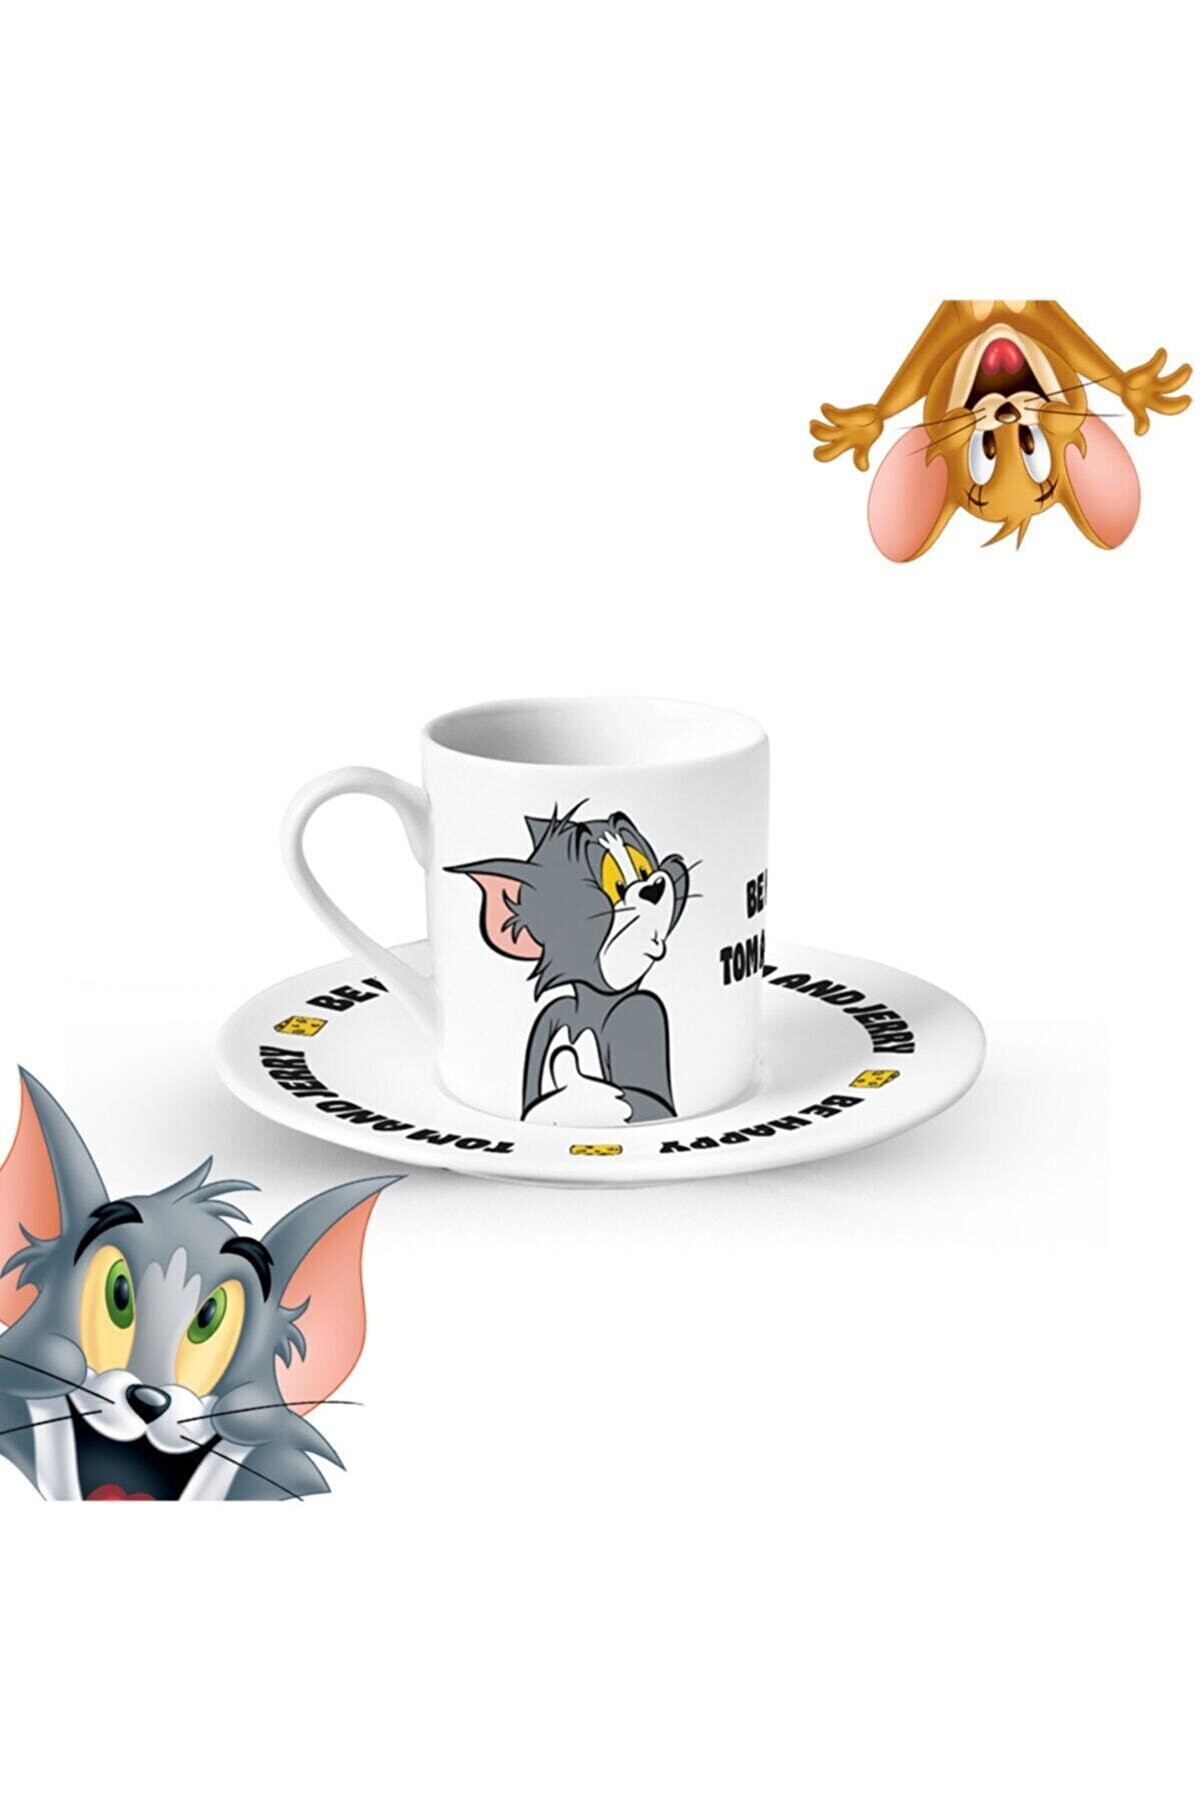 Tom and Jerry Türk Kahvesi Fincan Seti